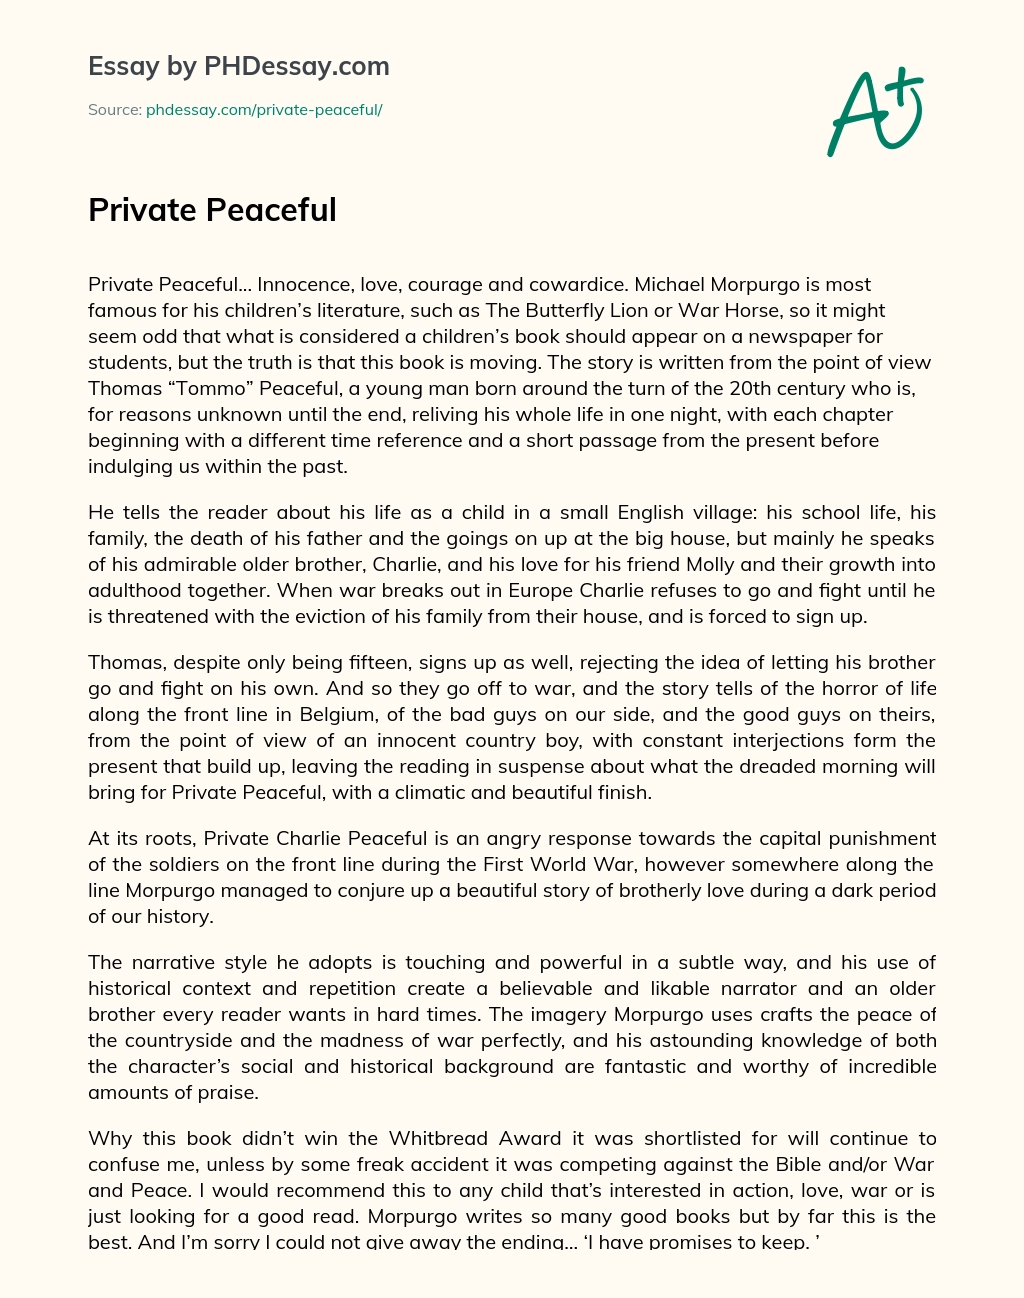 Private Peaceful essay